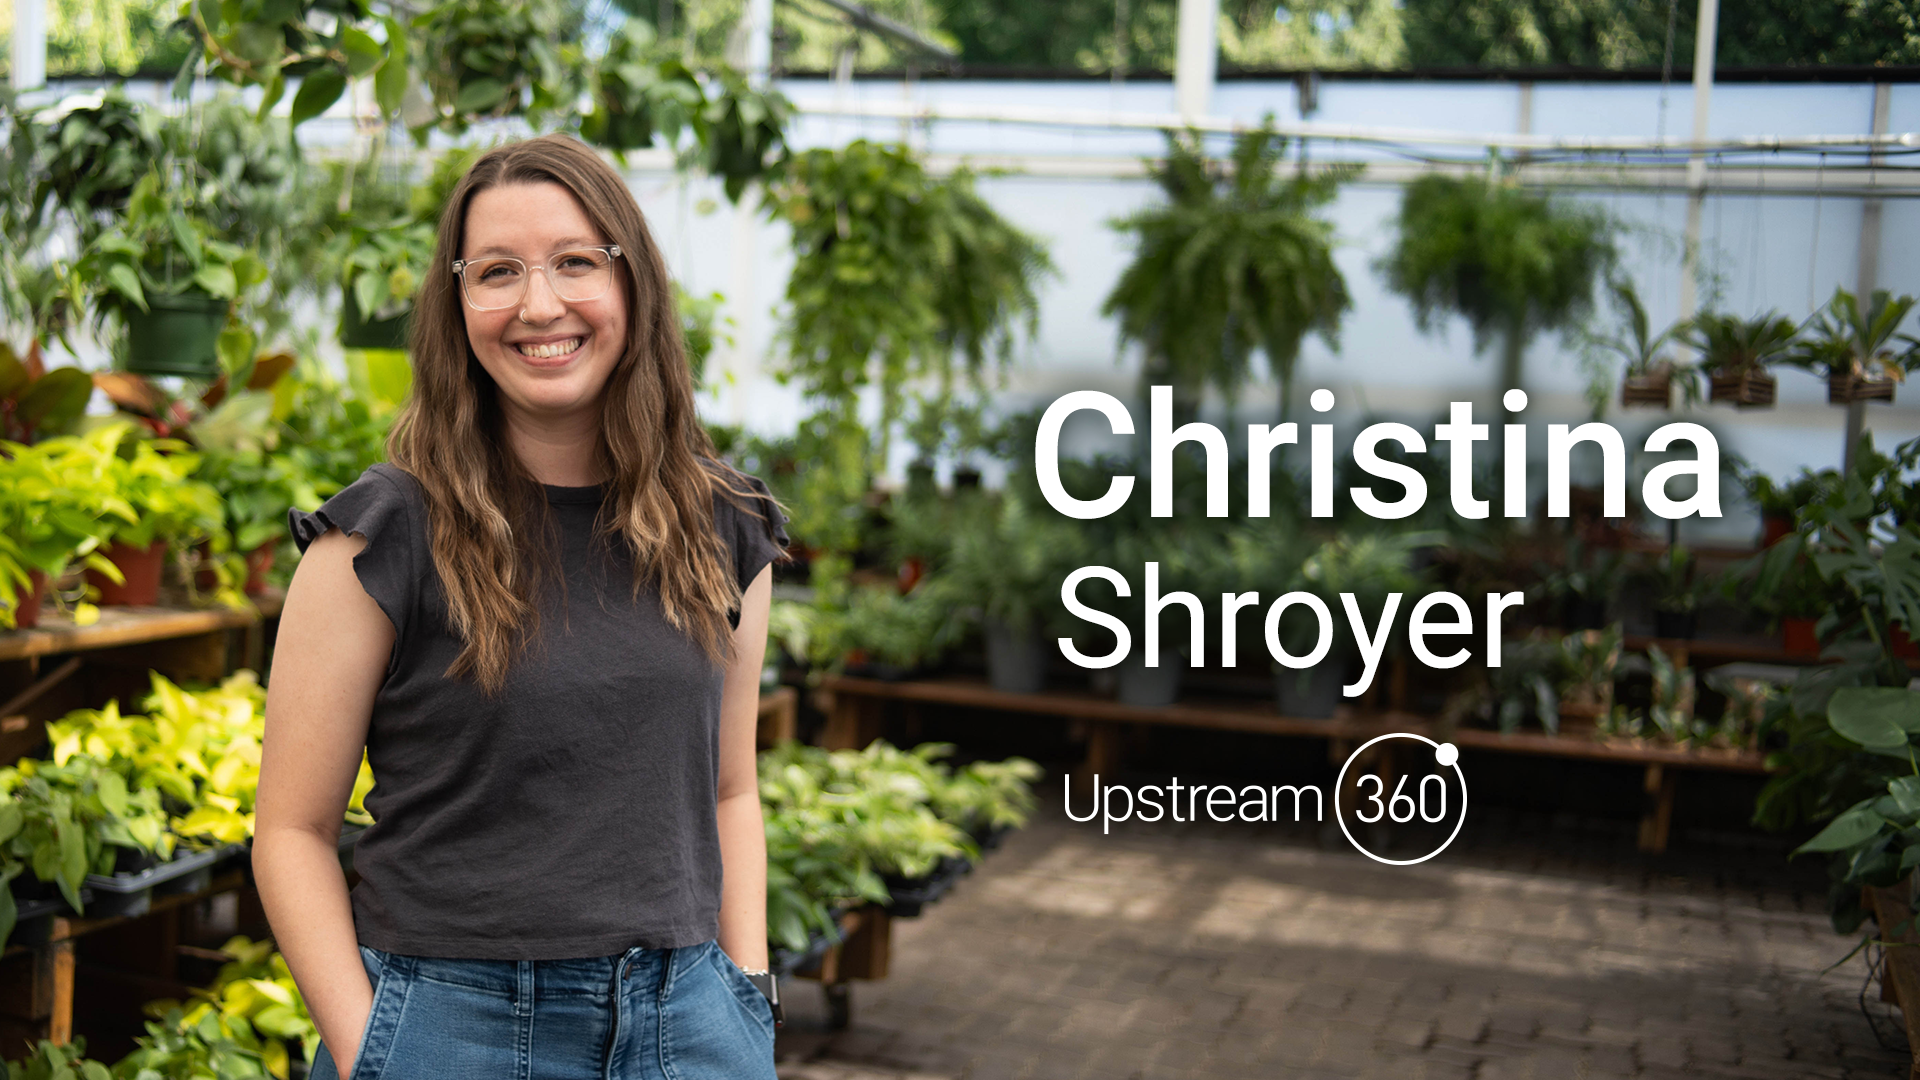 Meet Christina Shroyer: Graphic Design Lead